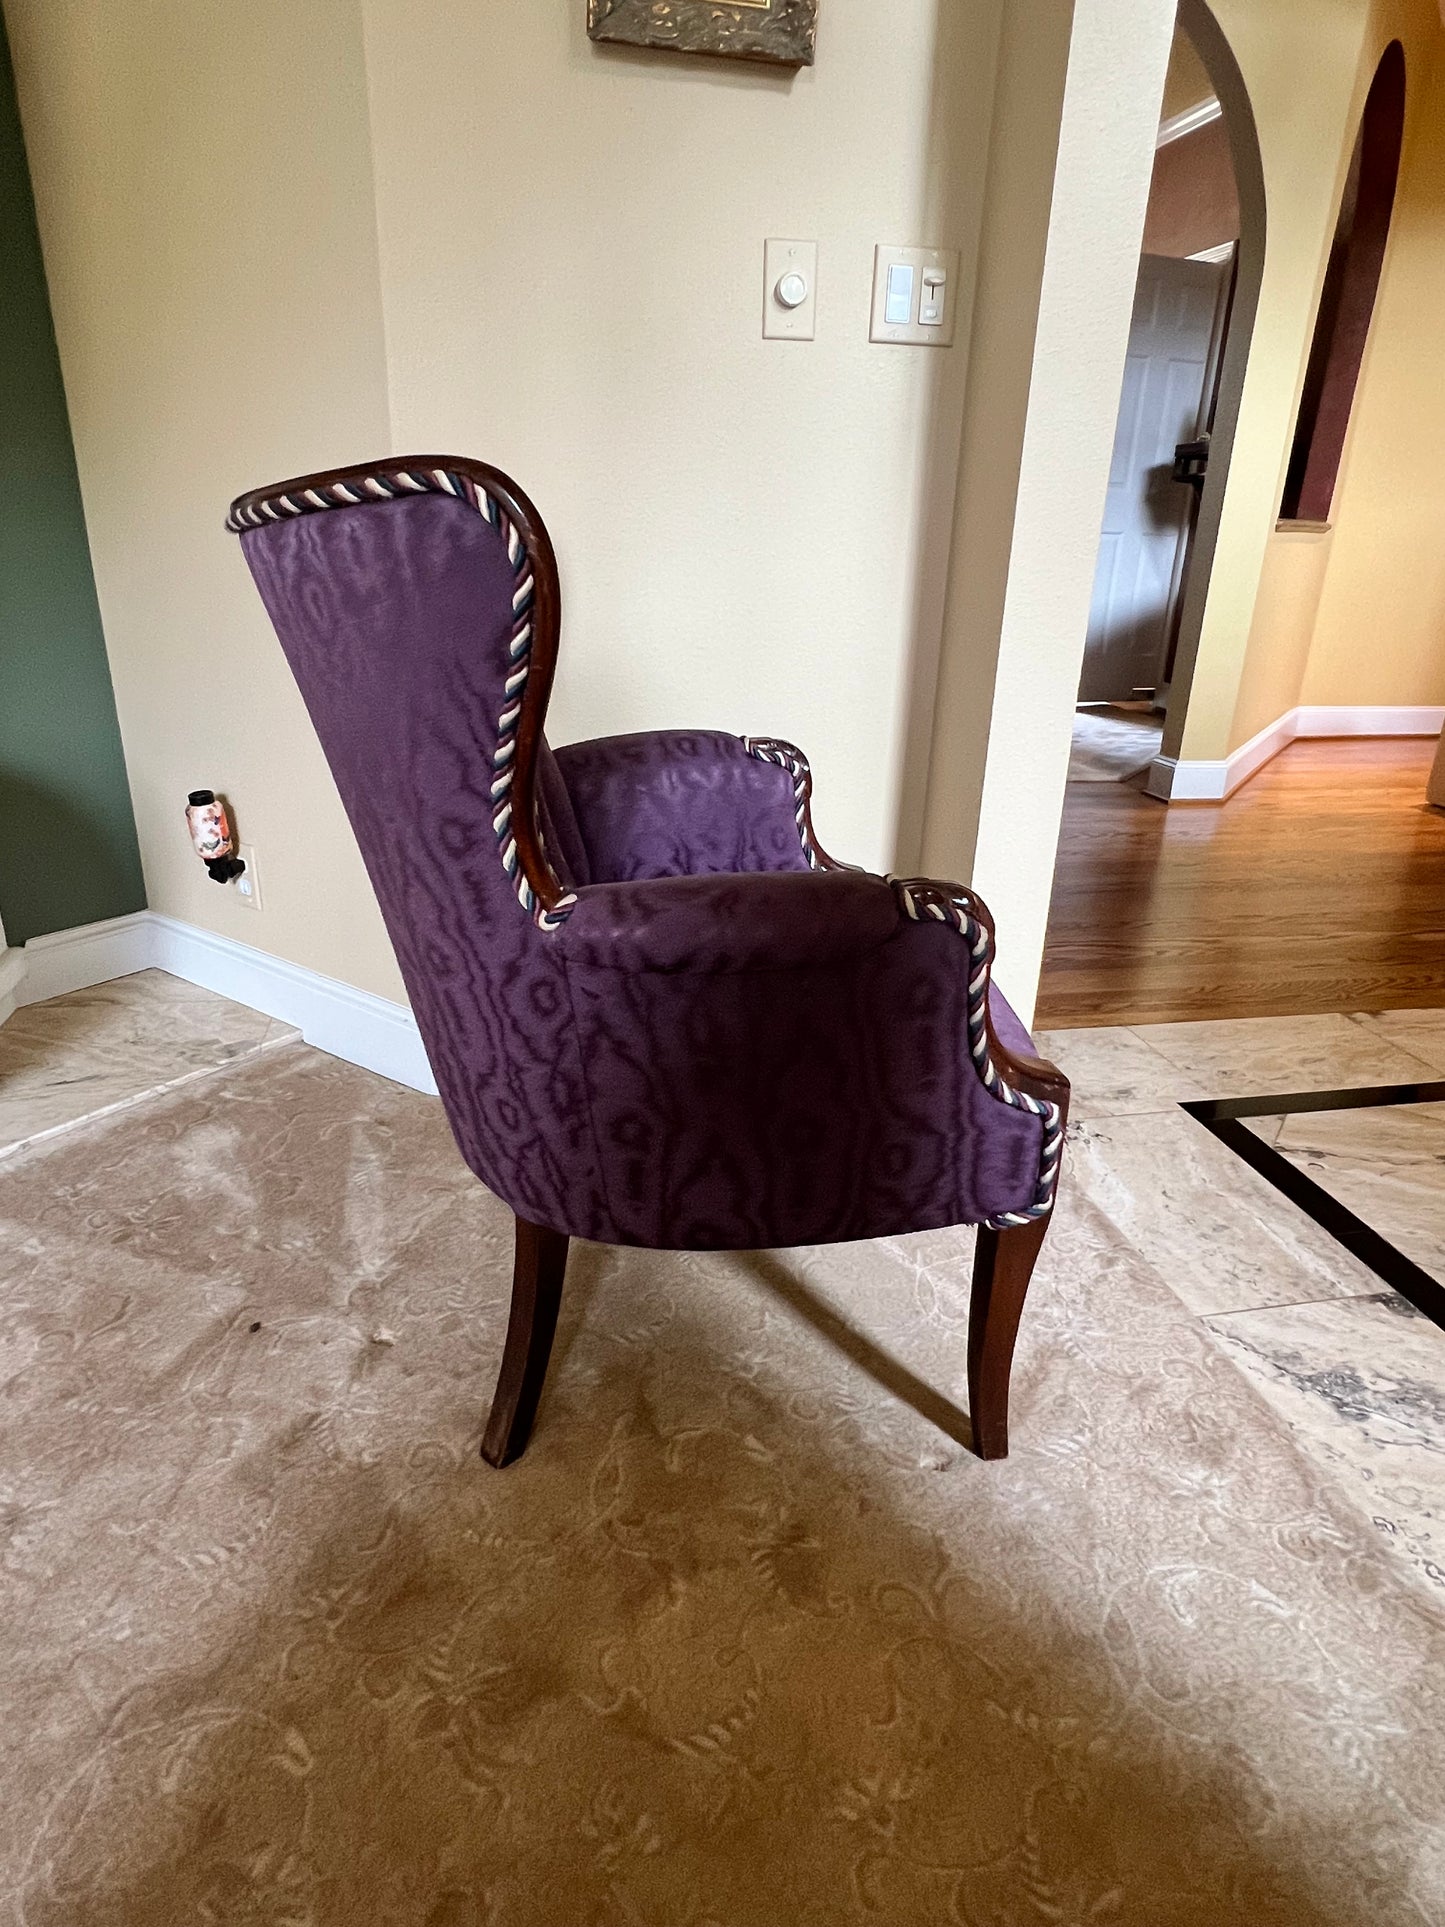 Channel Back Accent Butterfly Chair Purple Plum Moire Silk Taffeta PD138-17